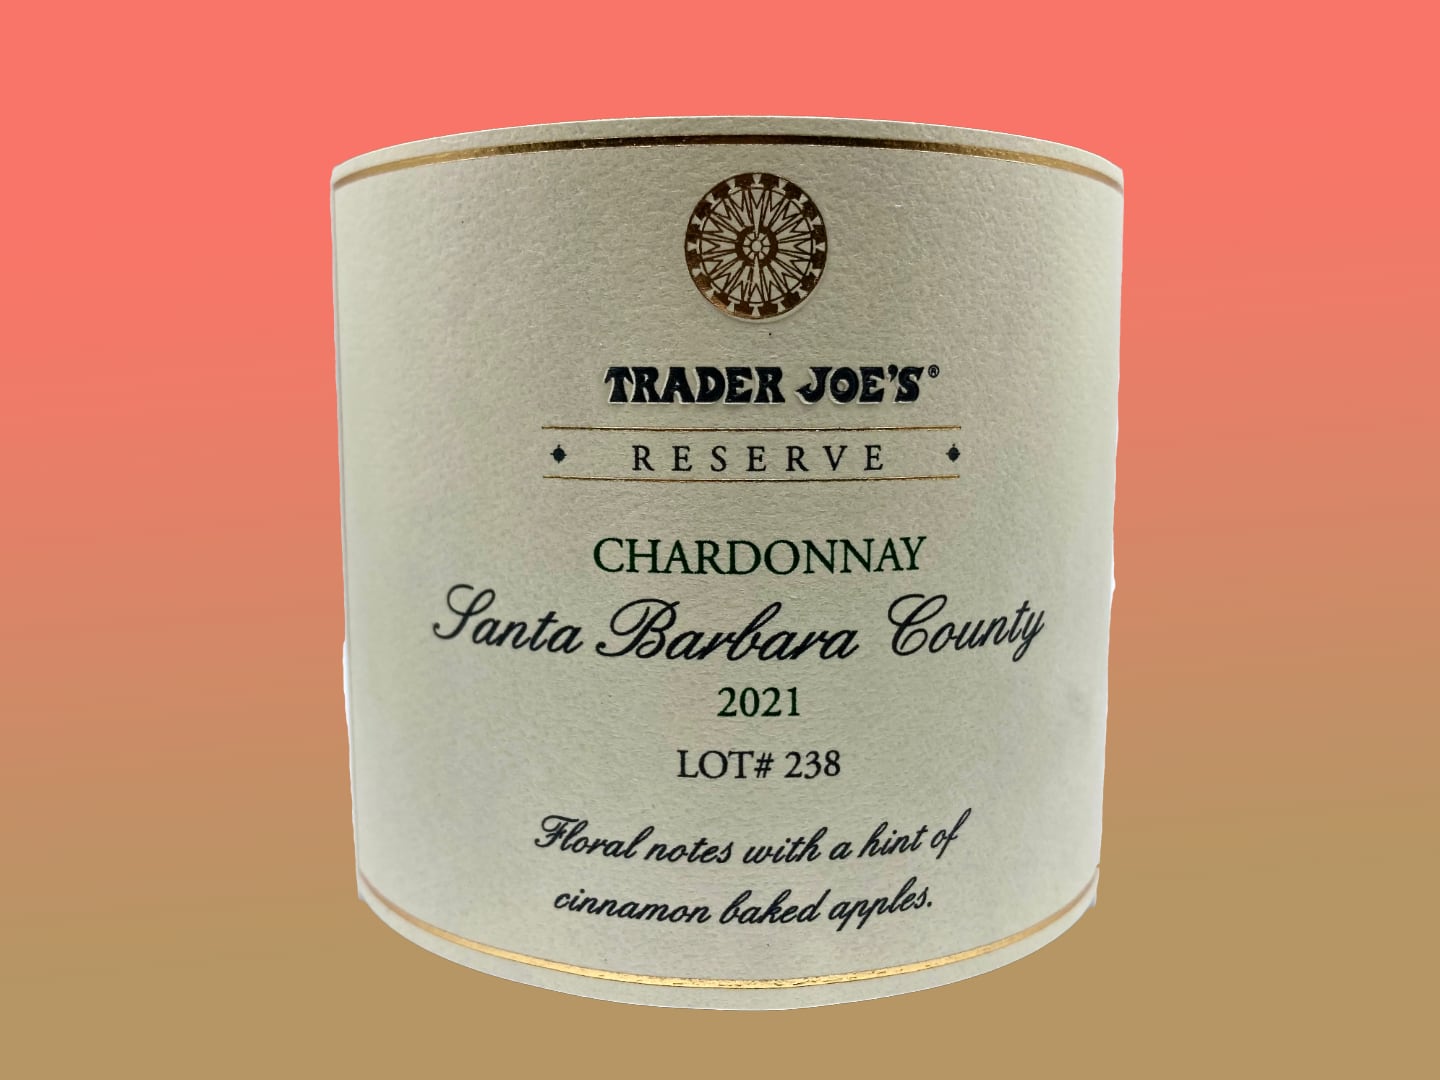 Trader Joe's Reserve Santa Barbara County Chardonnay 2021